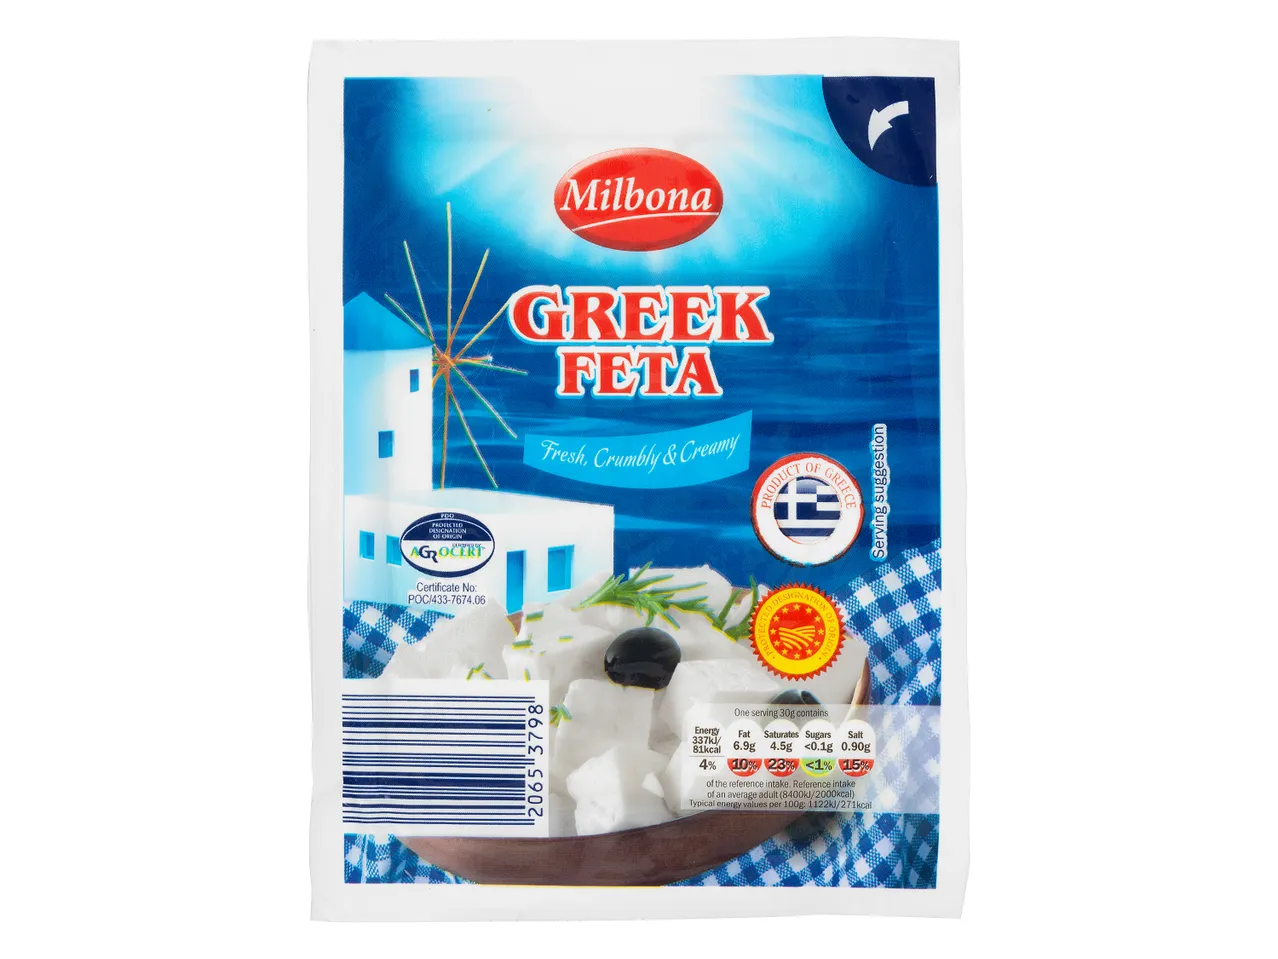 Go to full screen view: Milbona Greek Feta Cheese - Image 1